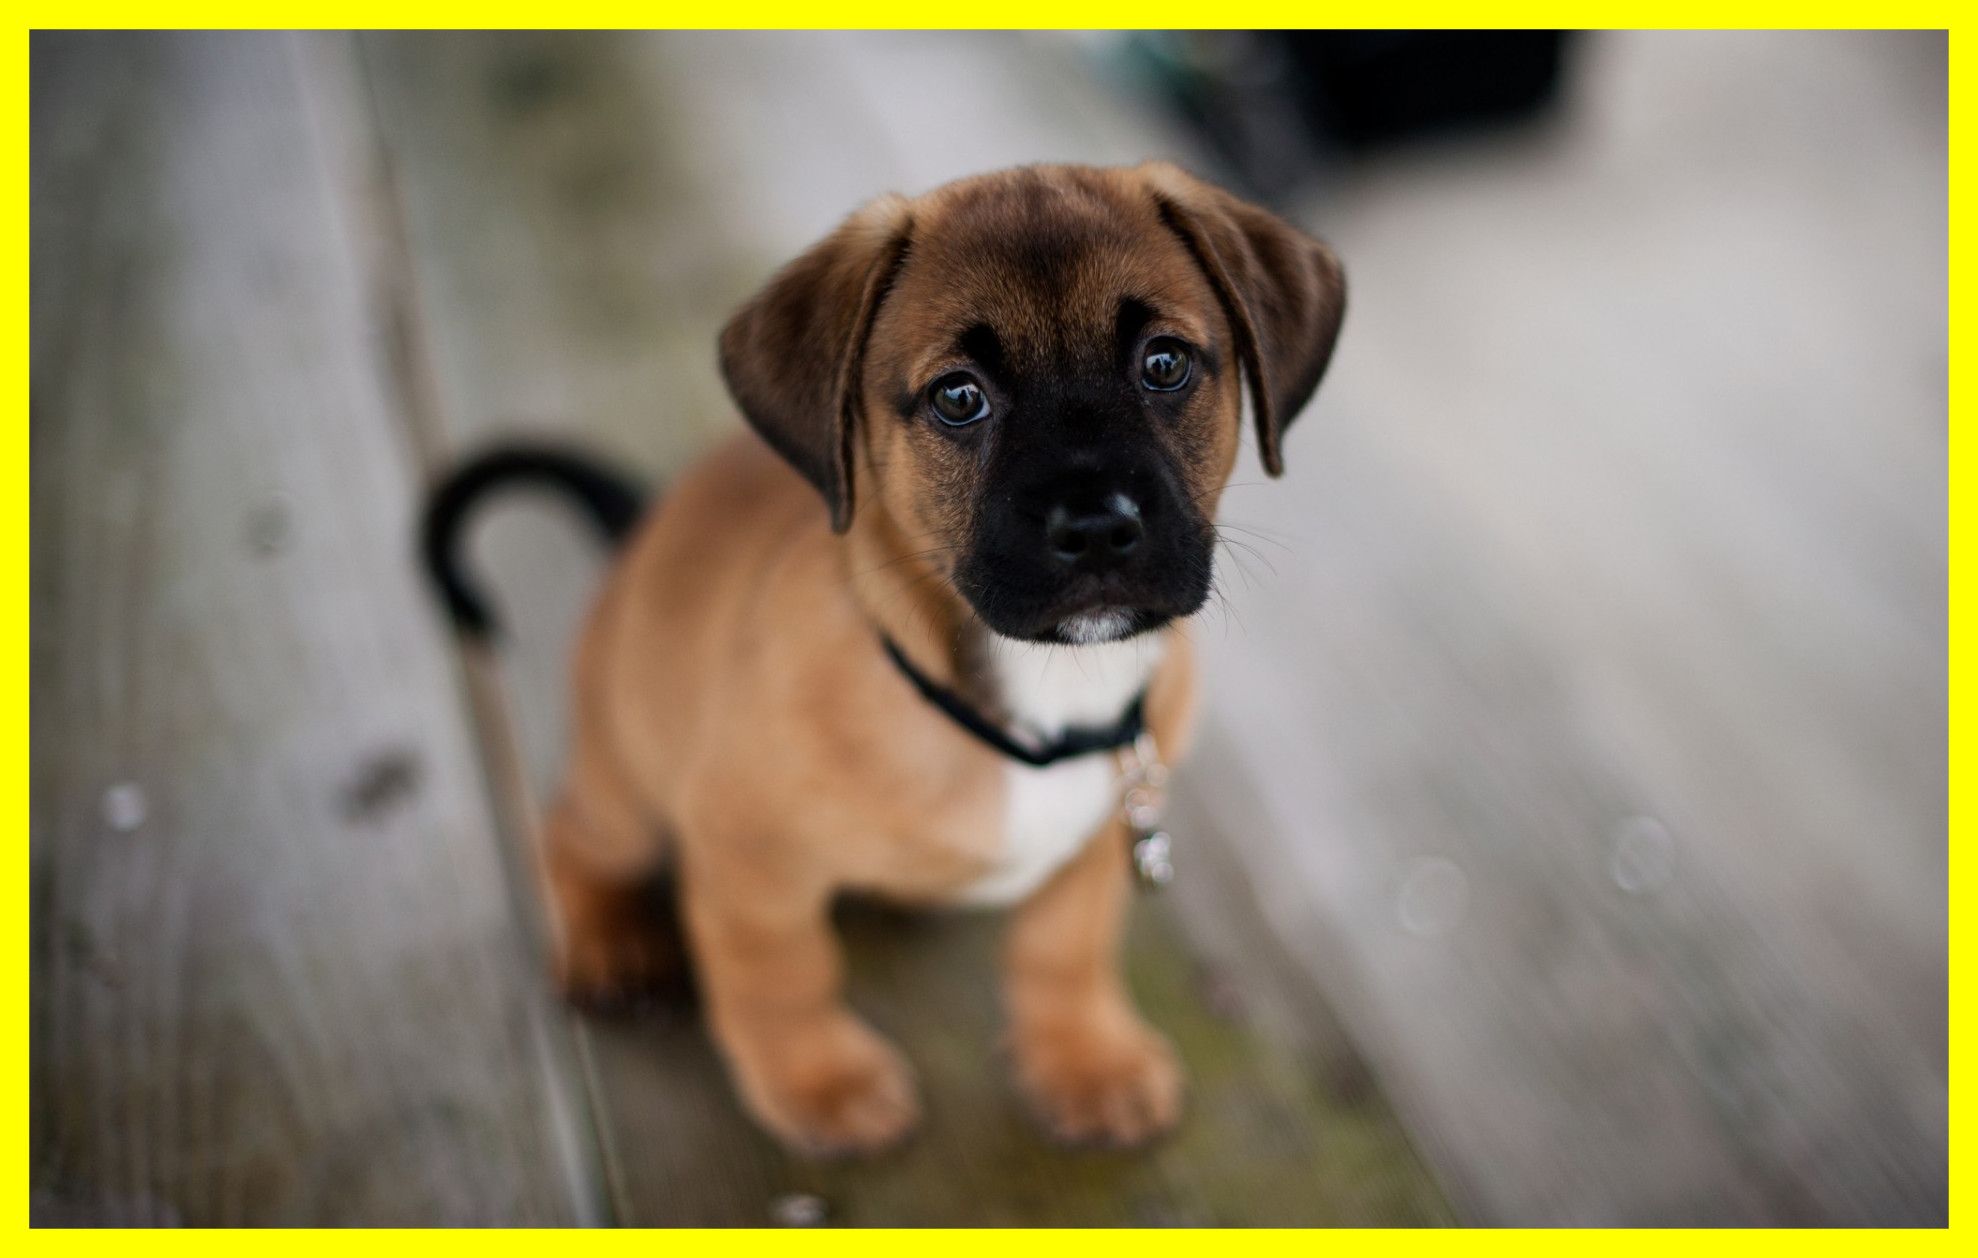 Amazing Puppy Dog Wallpaper Hd Desktop For Cute Trend - Cute Dog Image Hd - HD Wallpaper 